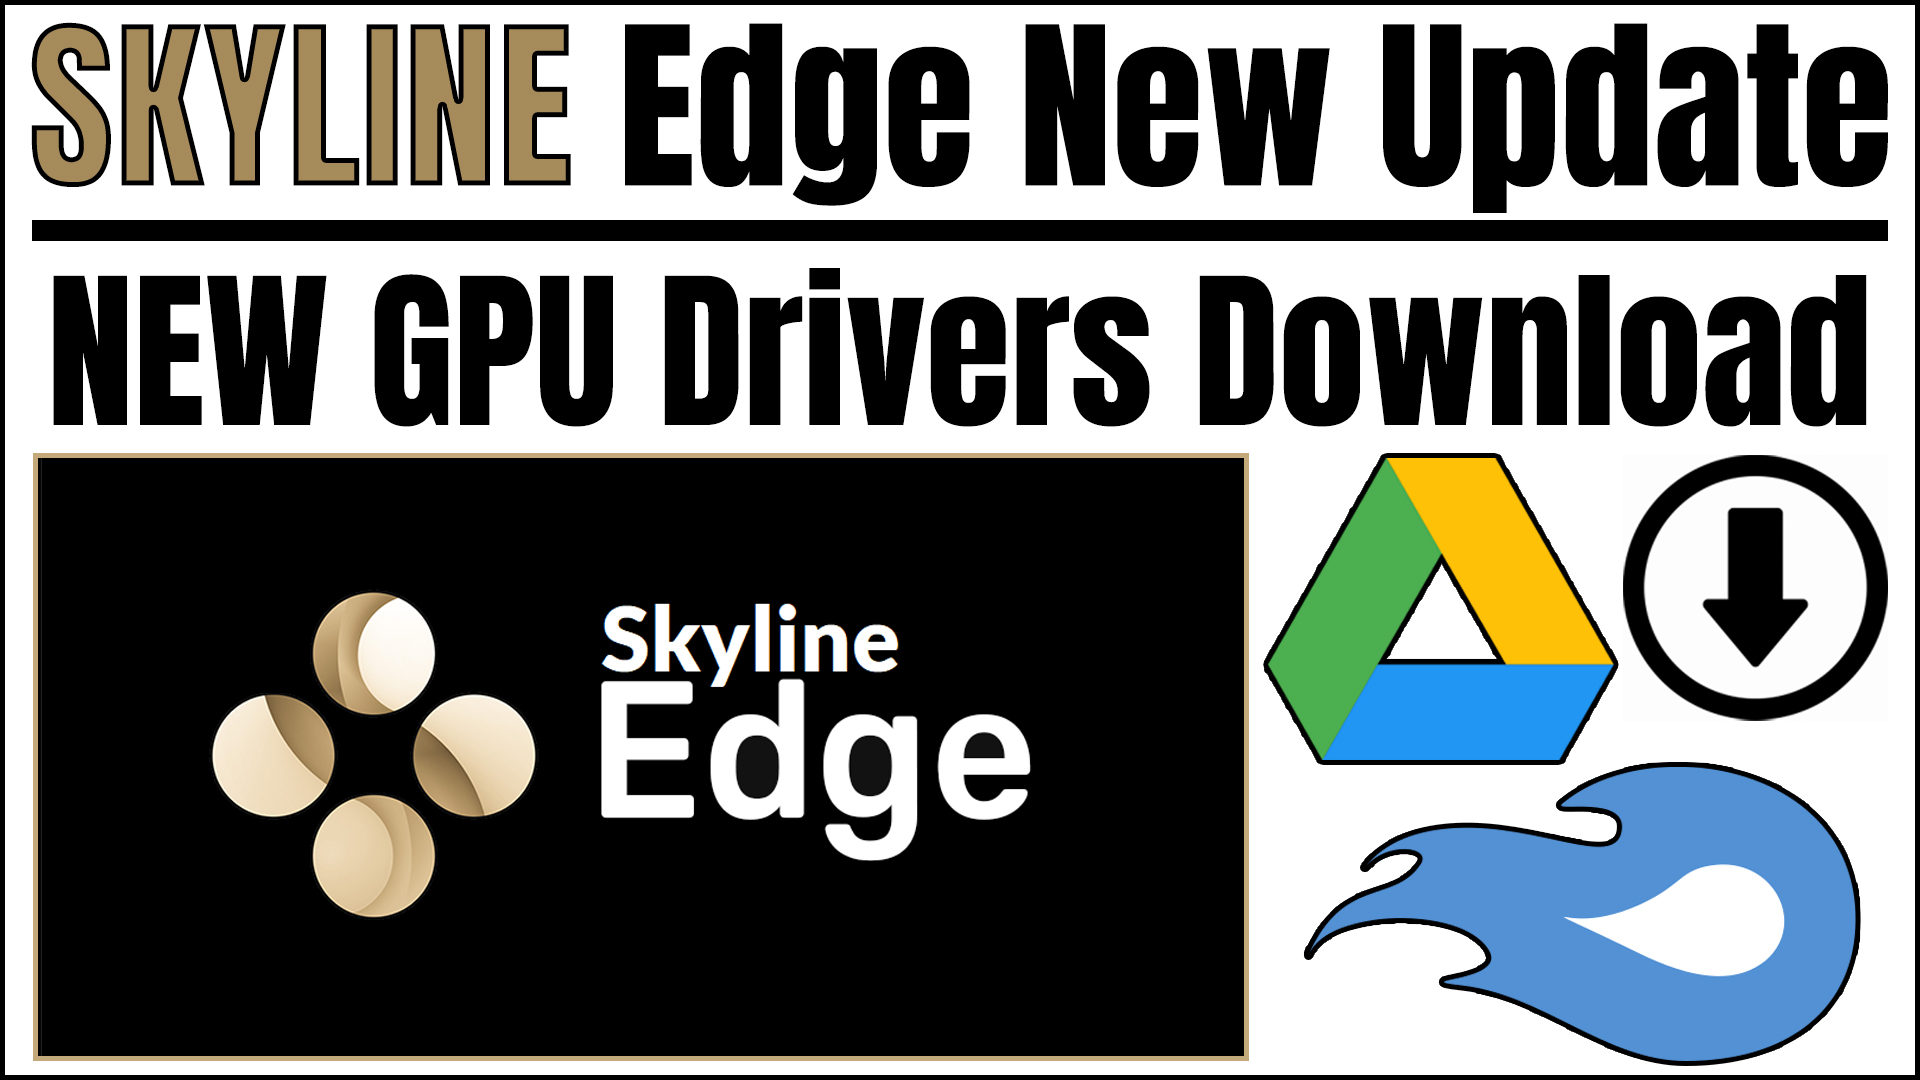 Skyline Edge New Update New GPU Drivers